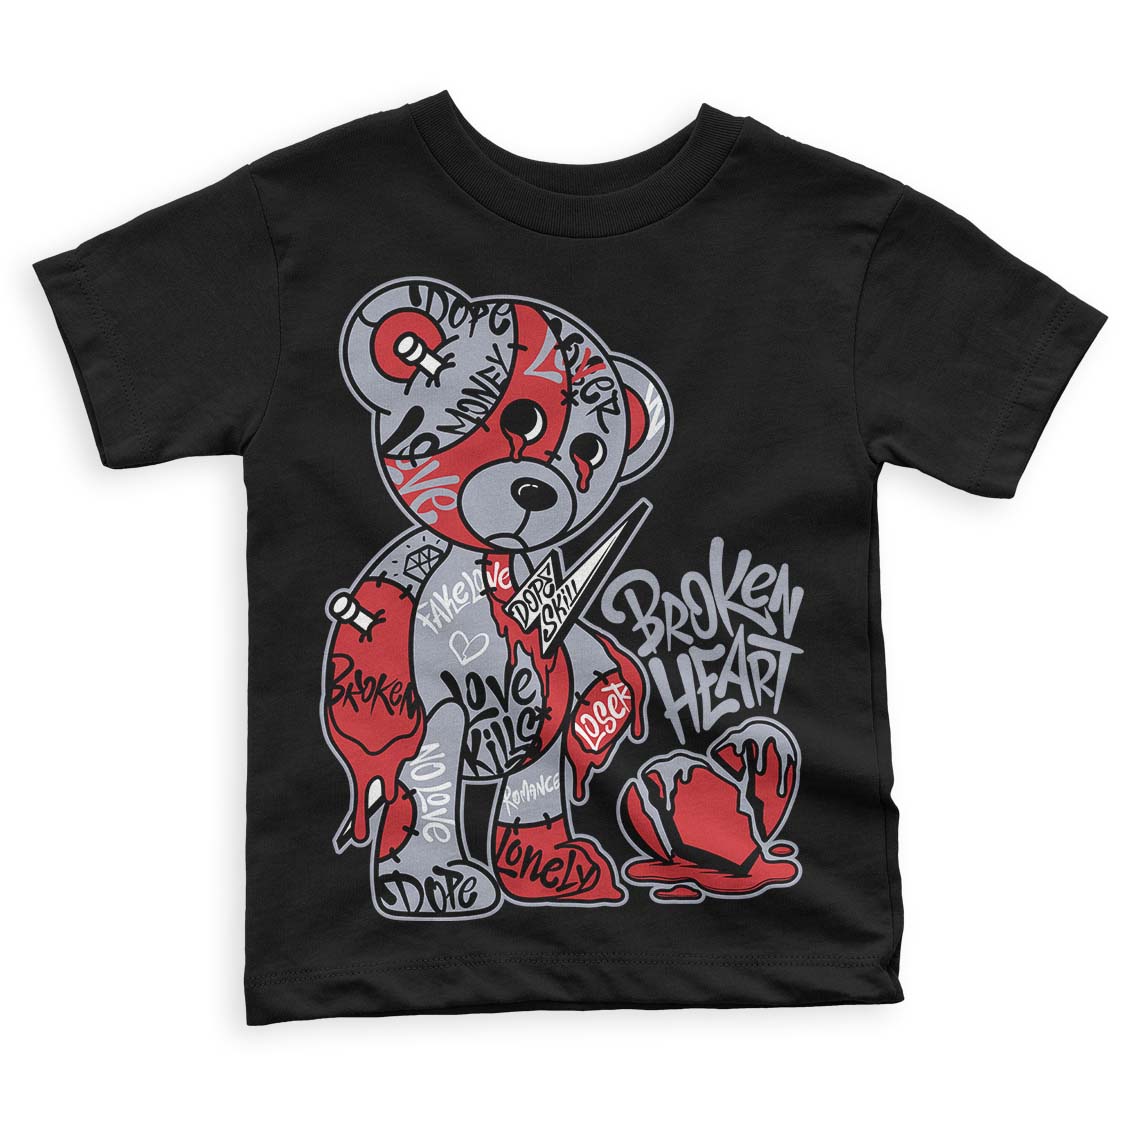 Jordan 4 “Bred Reimagined” DopeSkill Toddler Kids T-shirt Broken Heart Graphic Streetwear - Black 